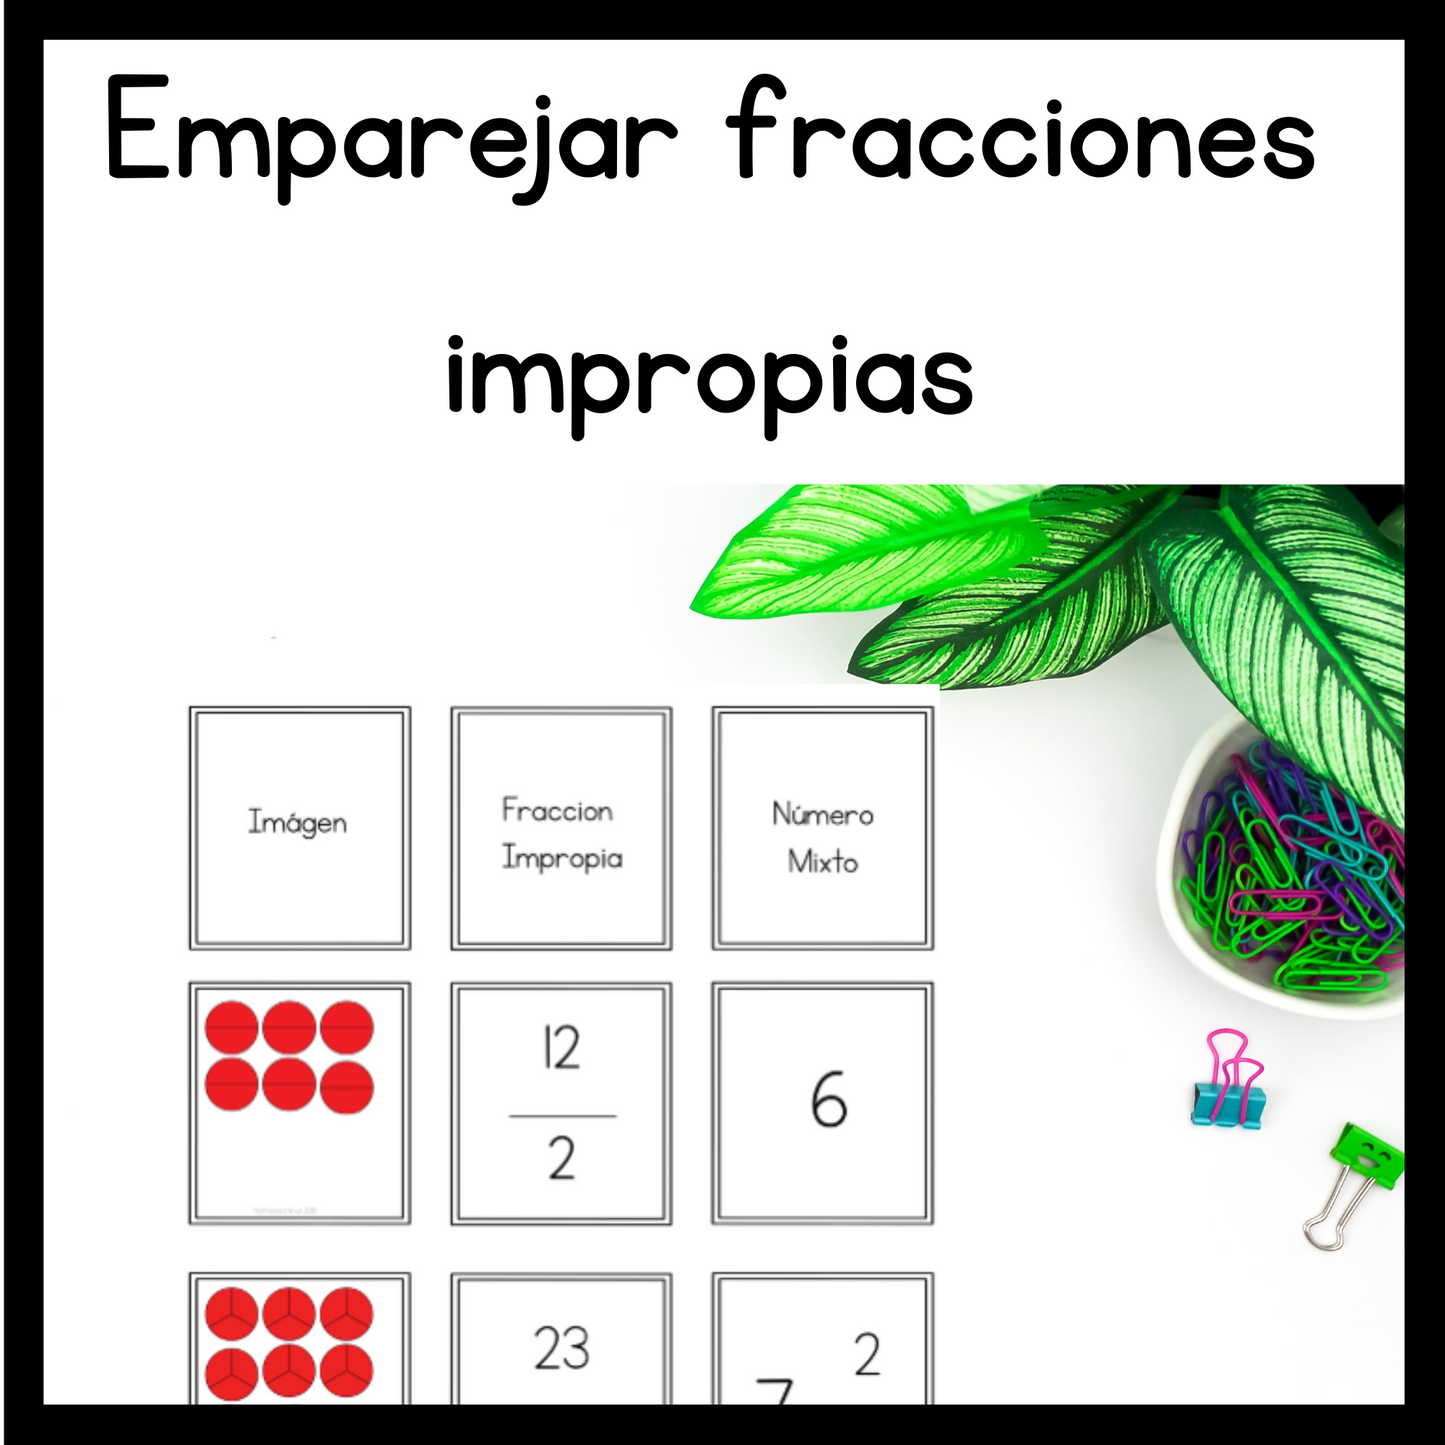 Emparejar fracciones impropias (improper fraction match up) - montessorikiwi